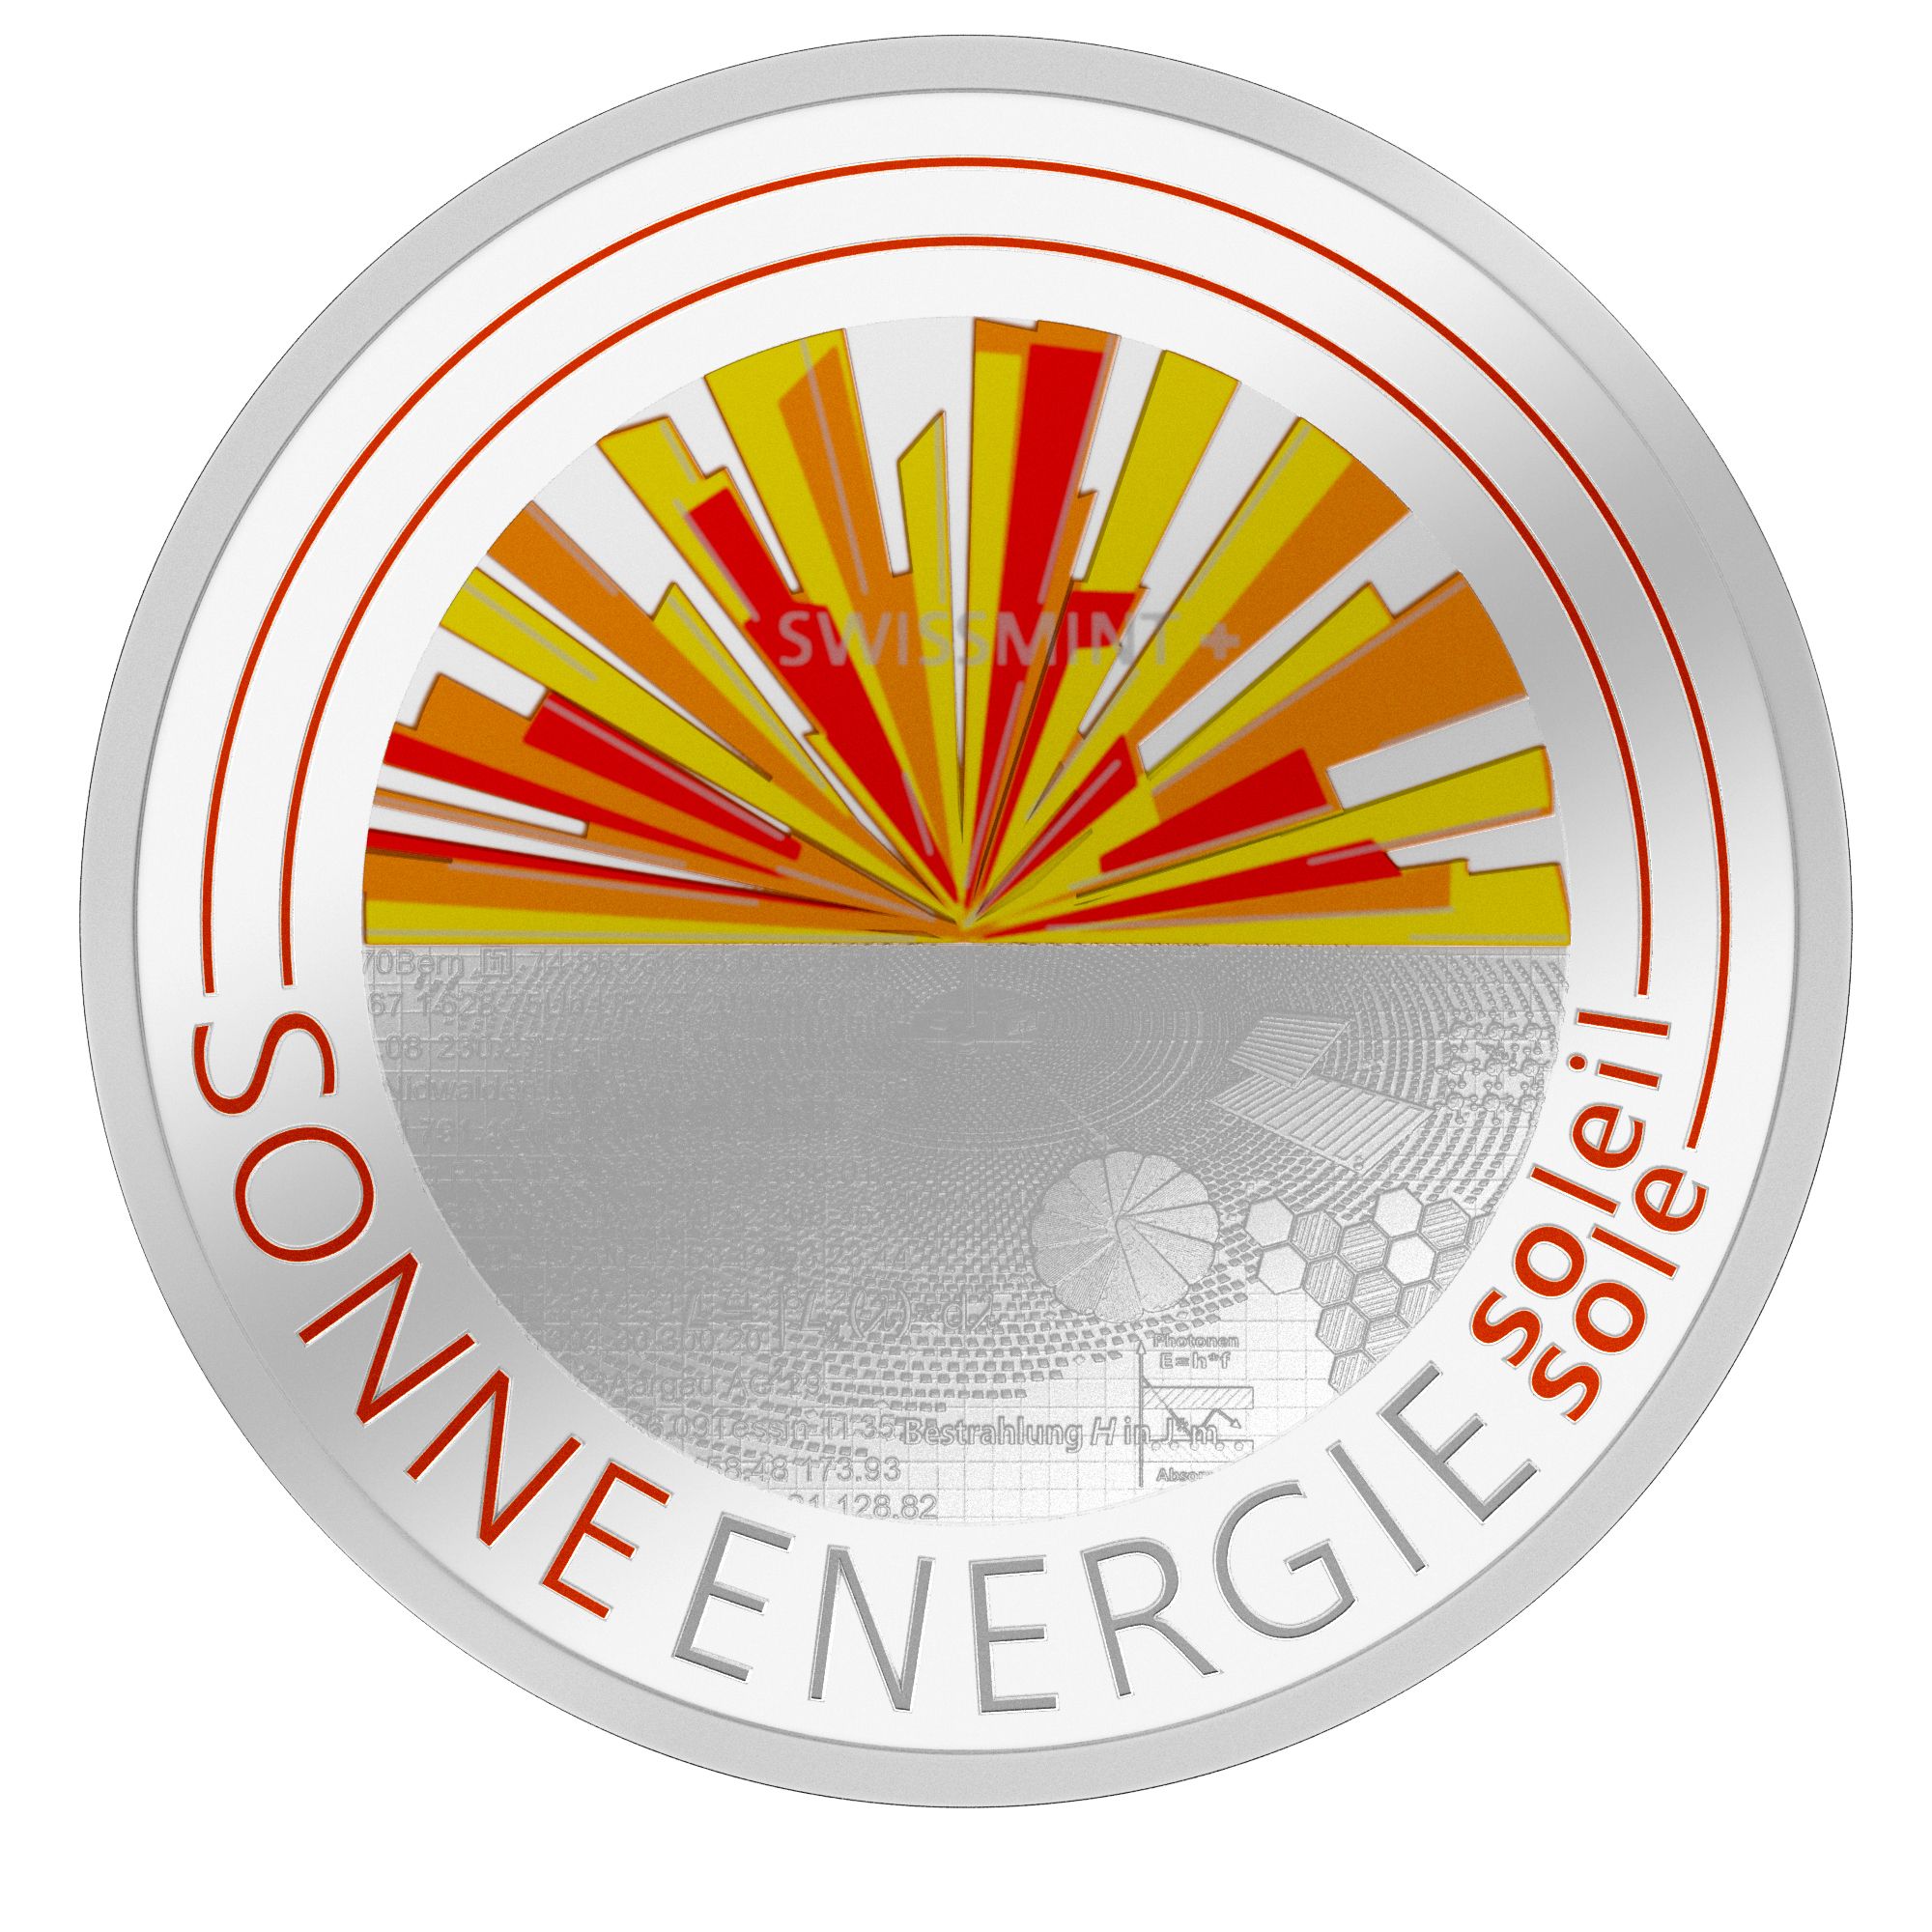 La moneta d’argento "Energia solare" svizzera da 20 franchi